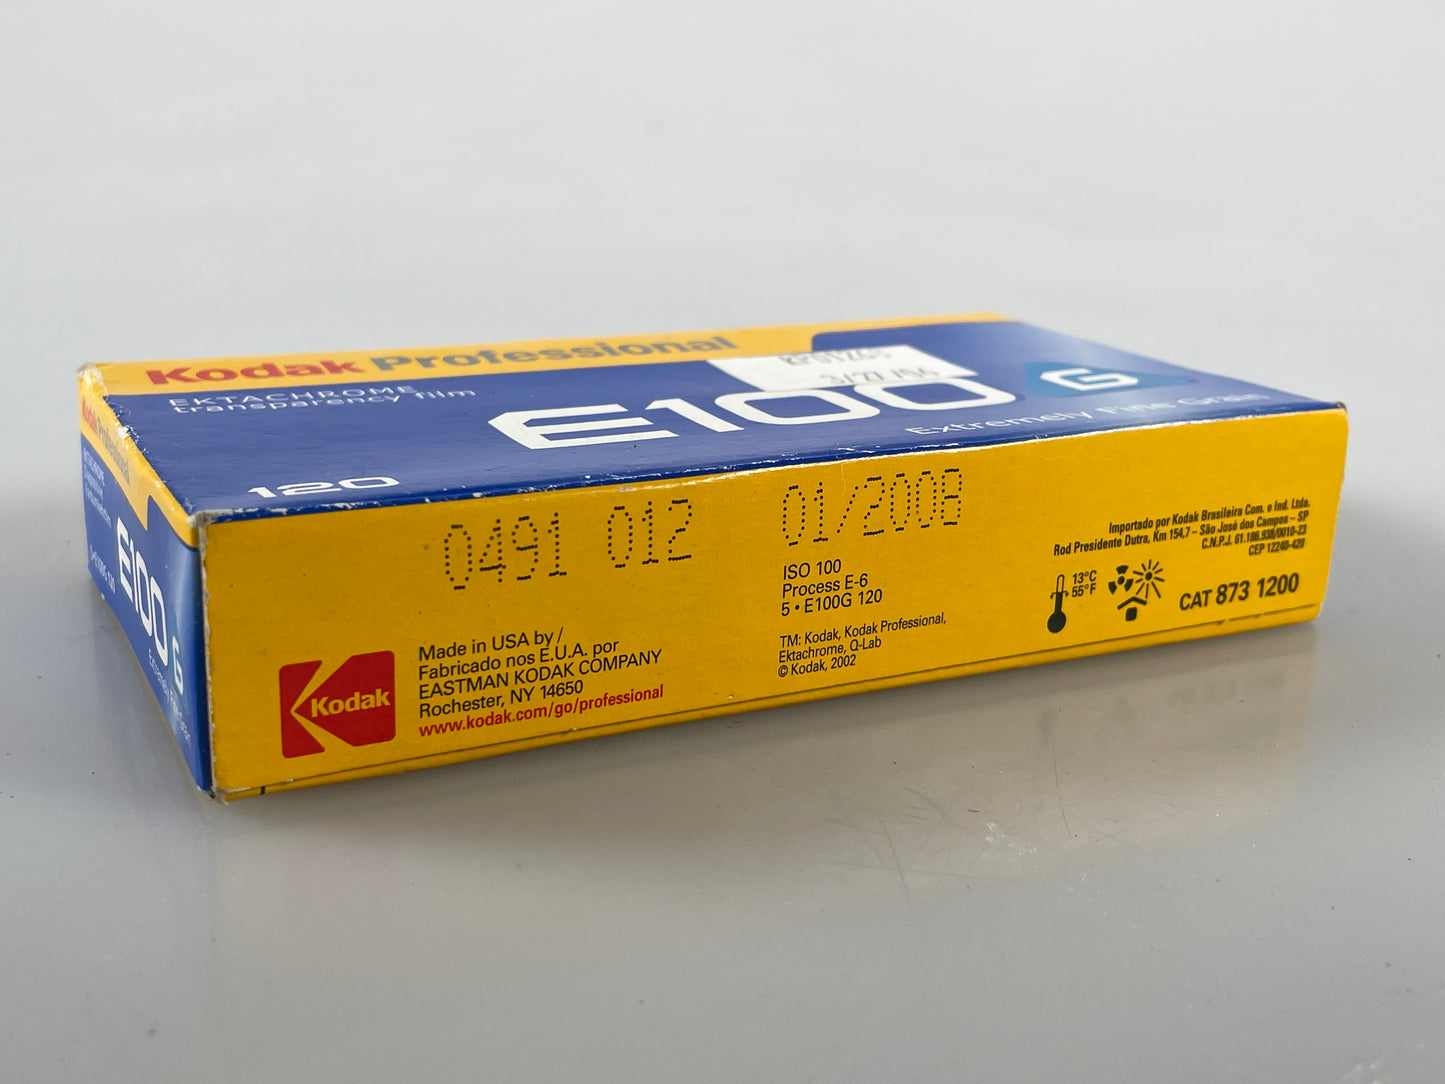 Kodak E100G ISO 100, 120, Color Transparency Film